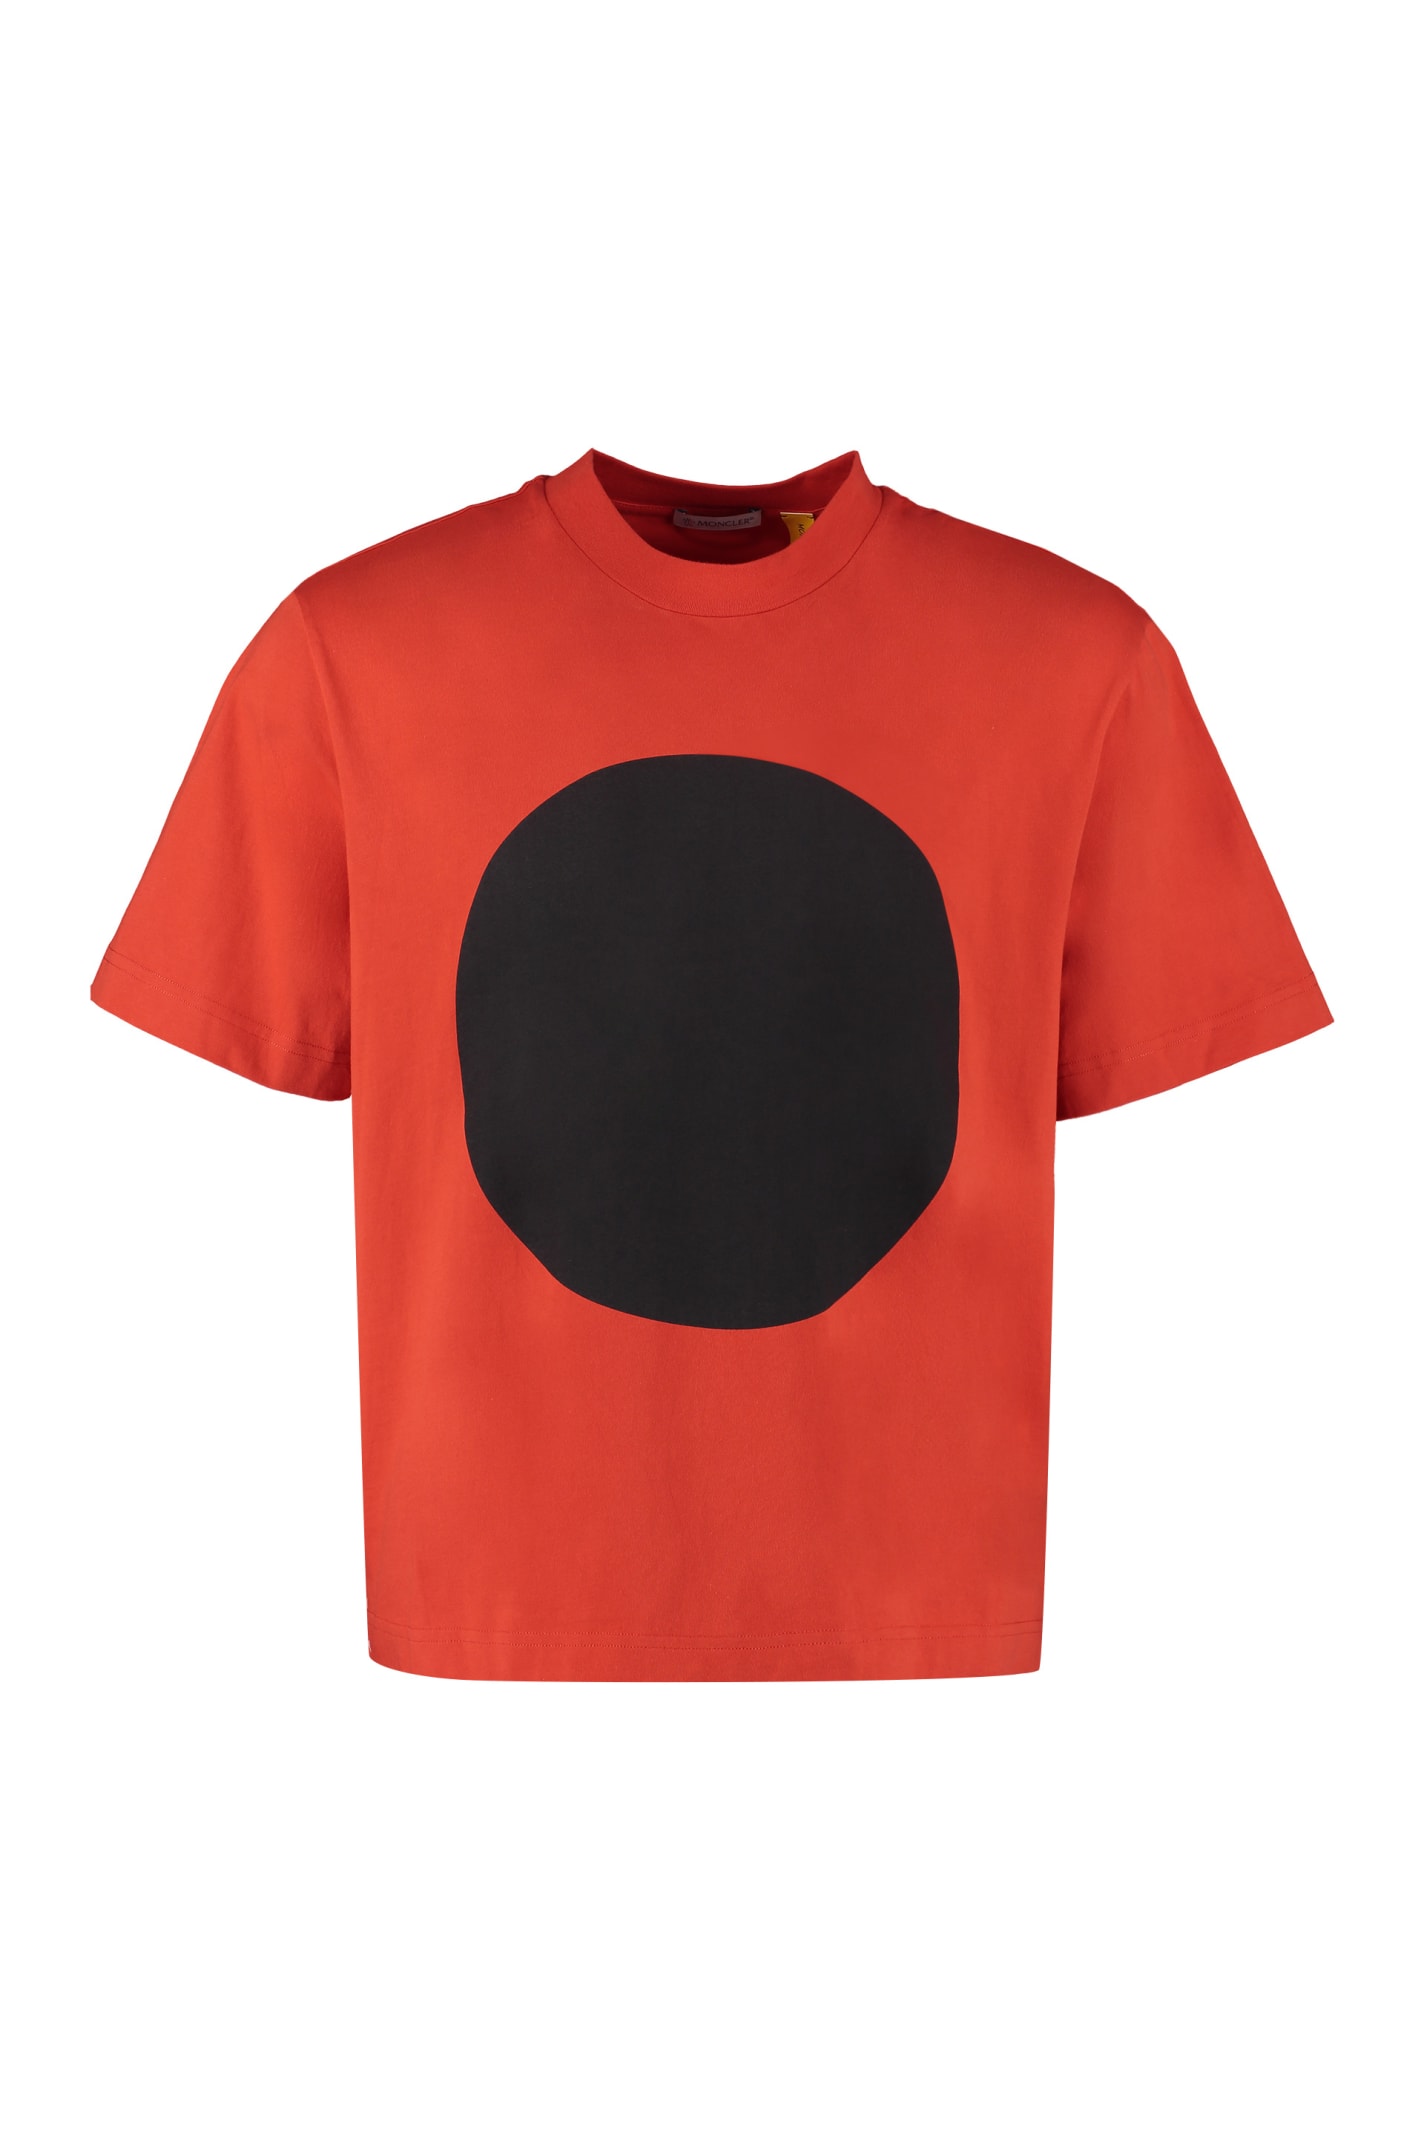 Moncler Genius 5 Moncler Craig Green - Printed Cotton T-shirt